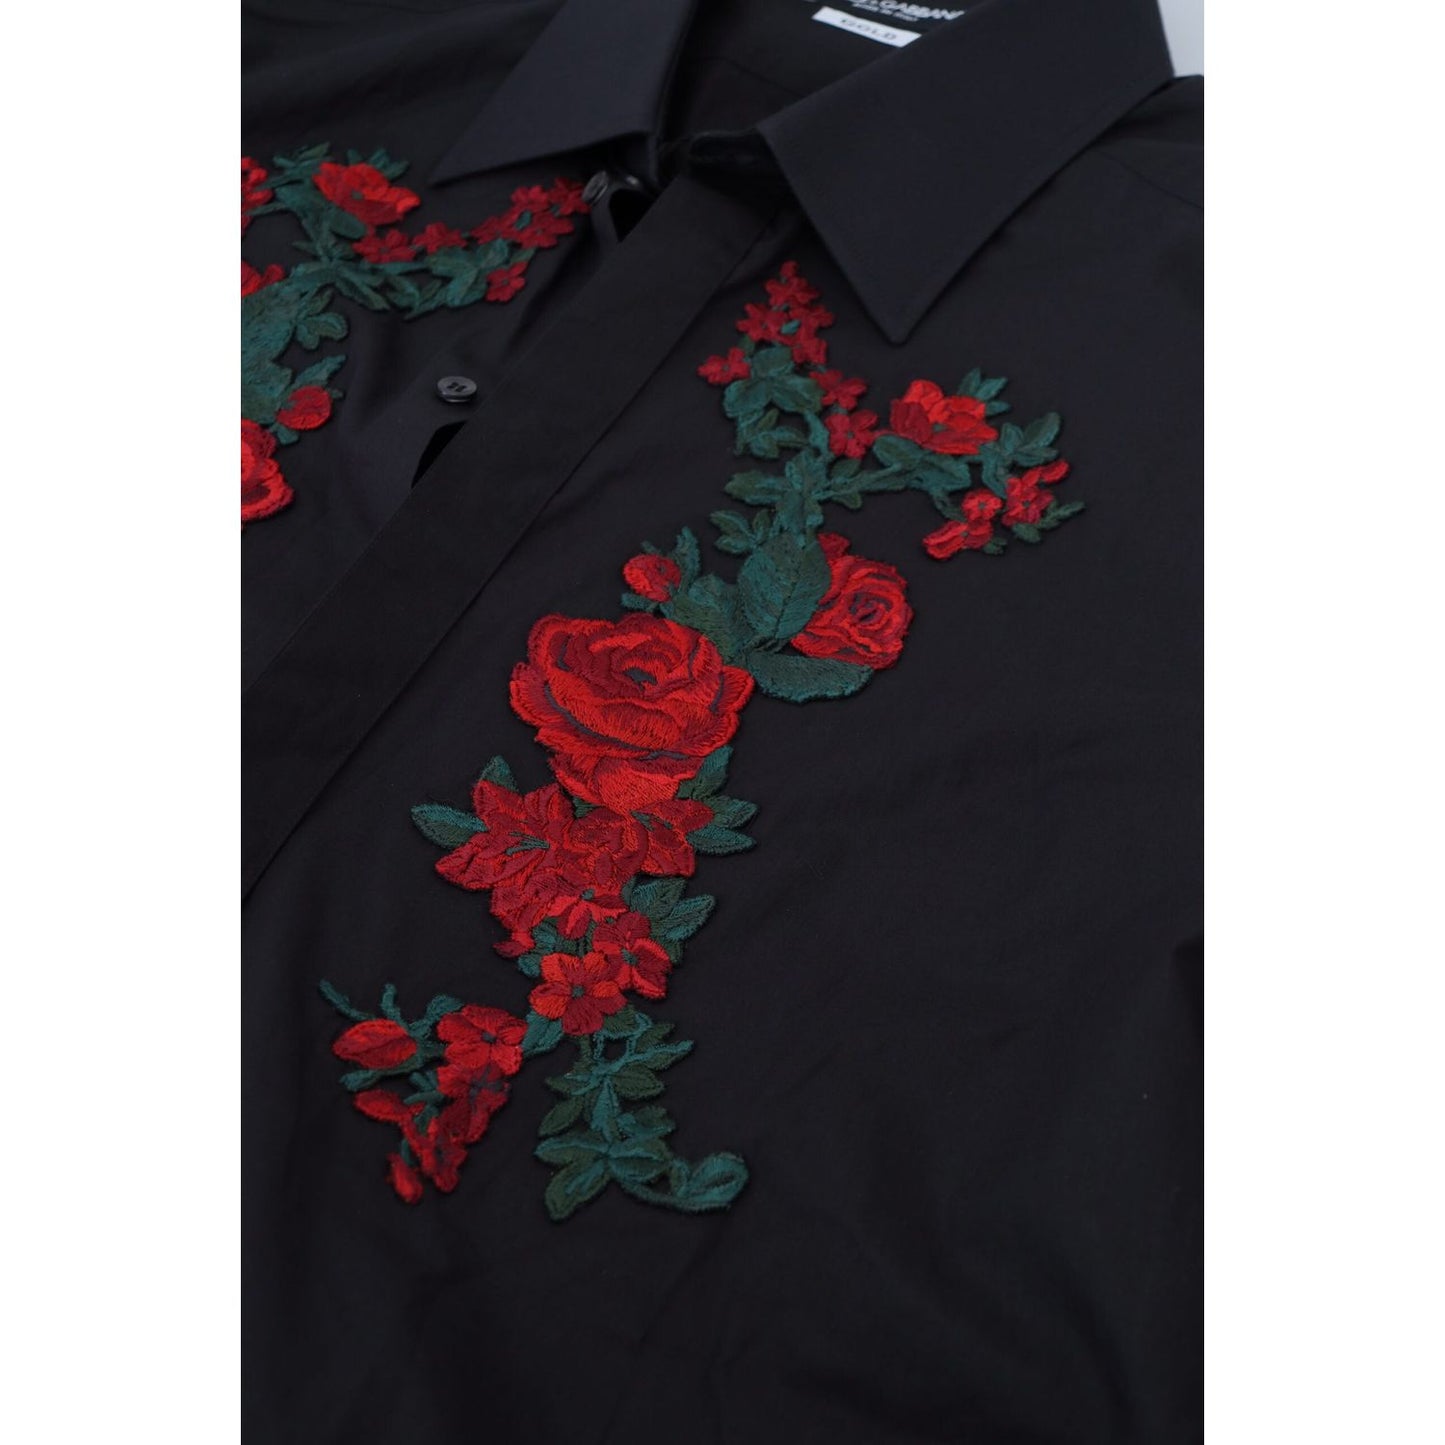 Dolce & Gabbana Elegant Floral Embroidered Cotton Shirt black-floral-embroidery-men-long-sleeves-gold-shirt